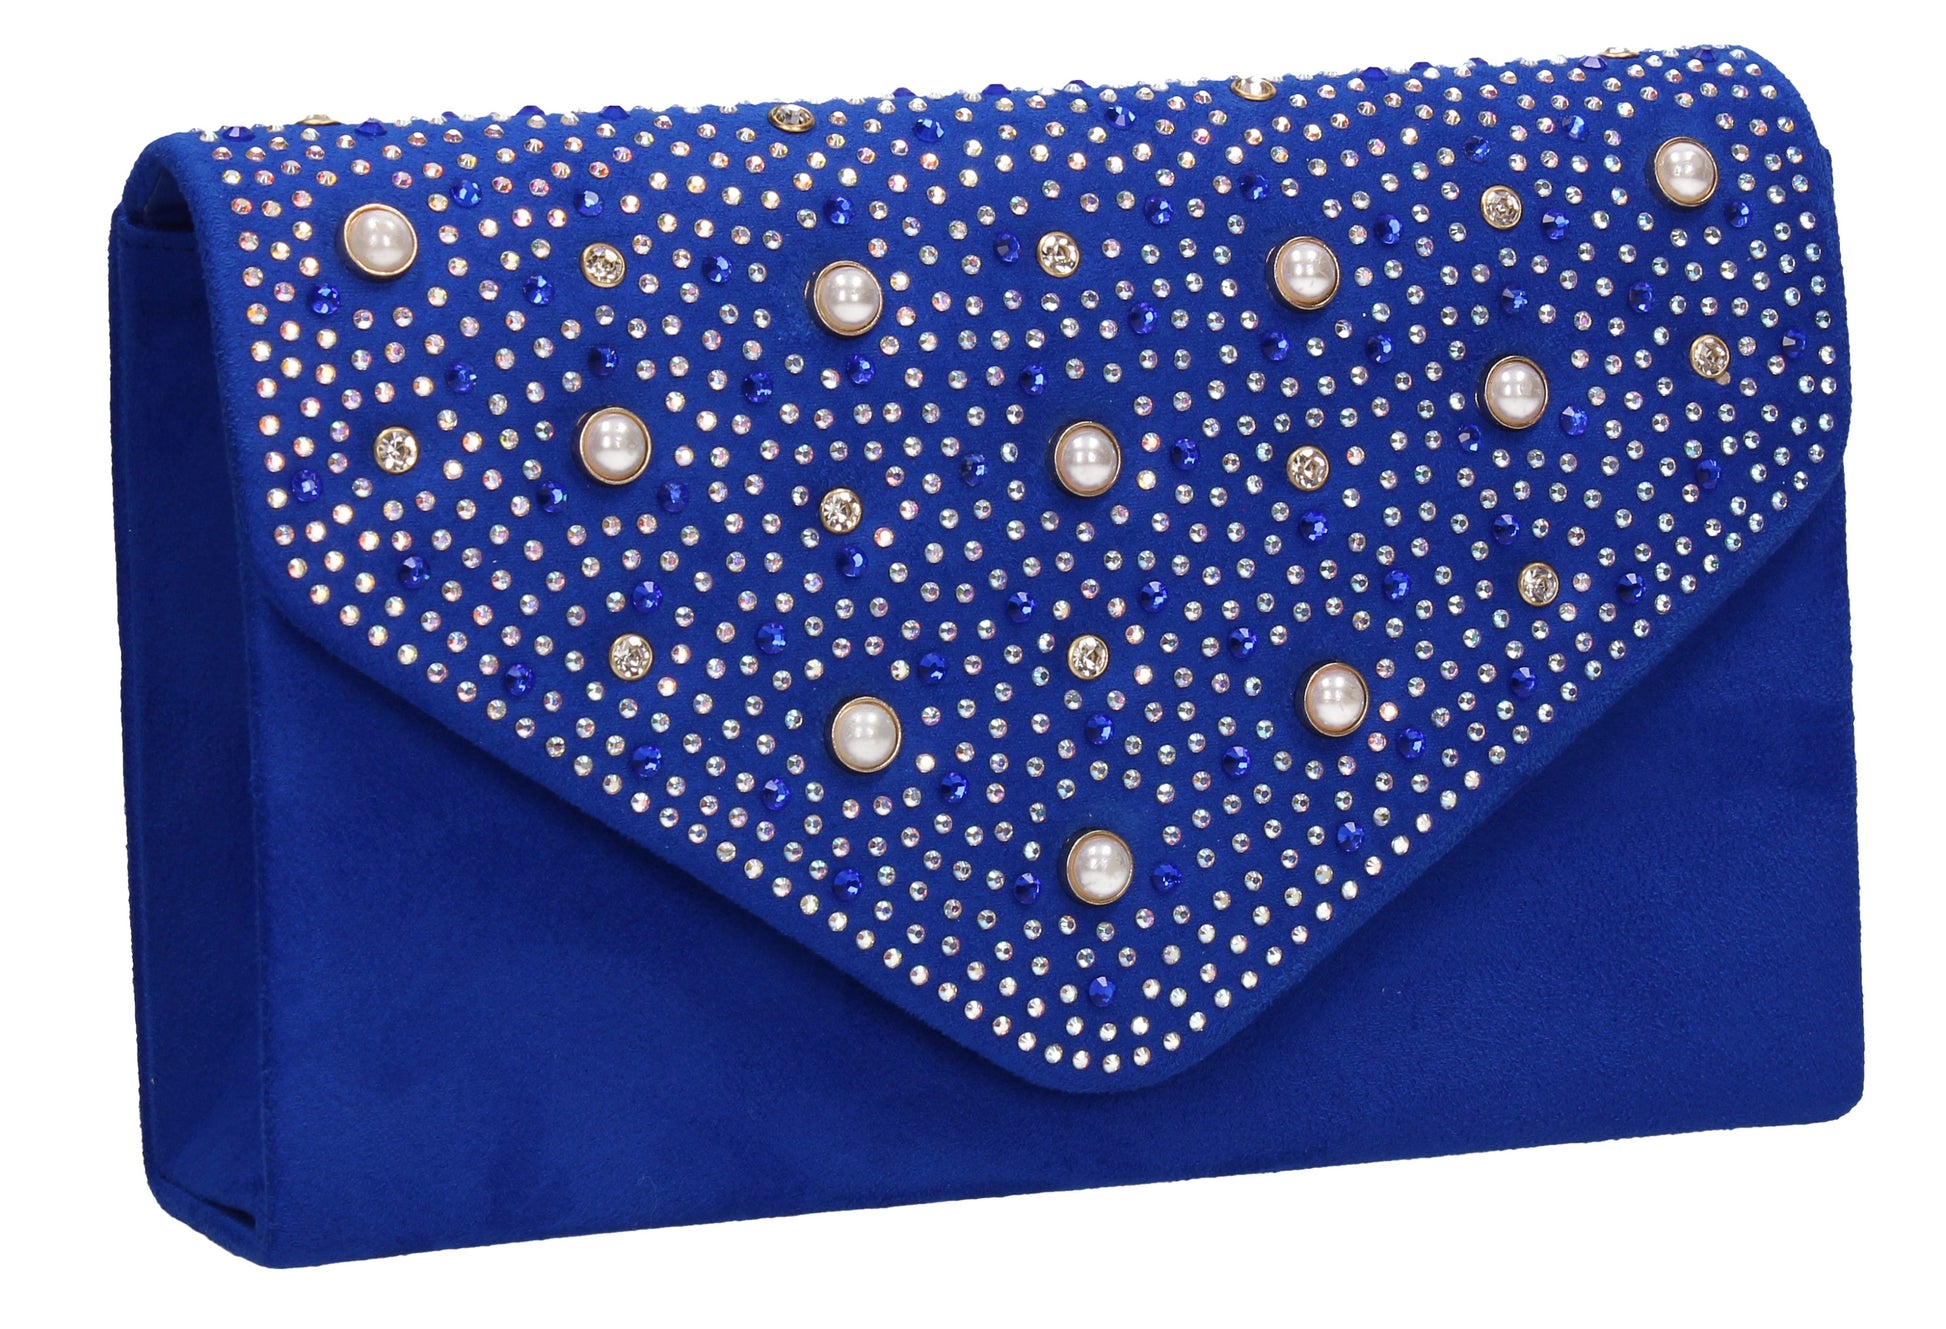 SWANKYSWANS Laurel Clutch Bag Royal Blue Cute Cheap Clutch Bag For Weddings School and Work